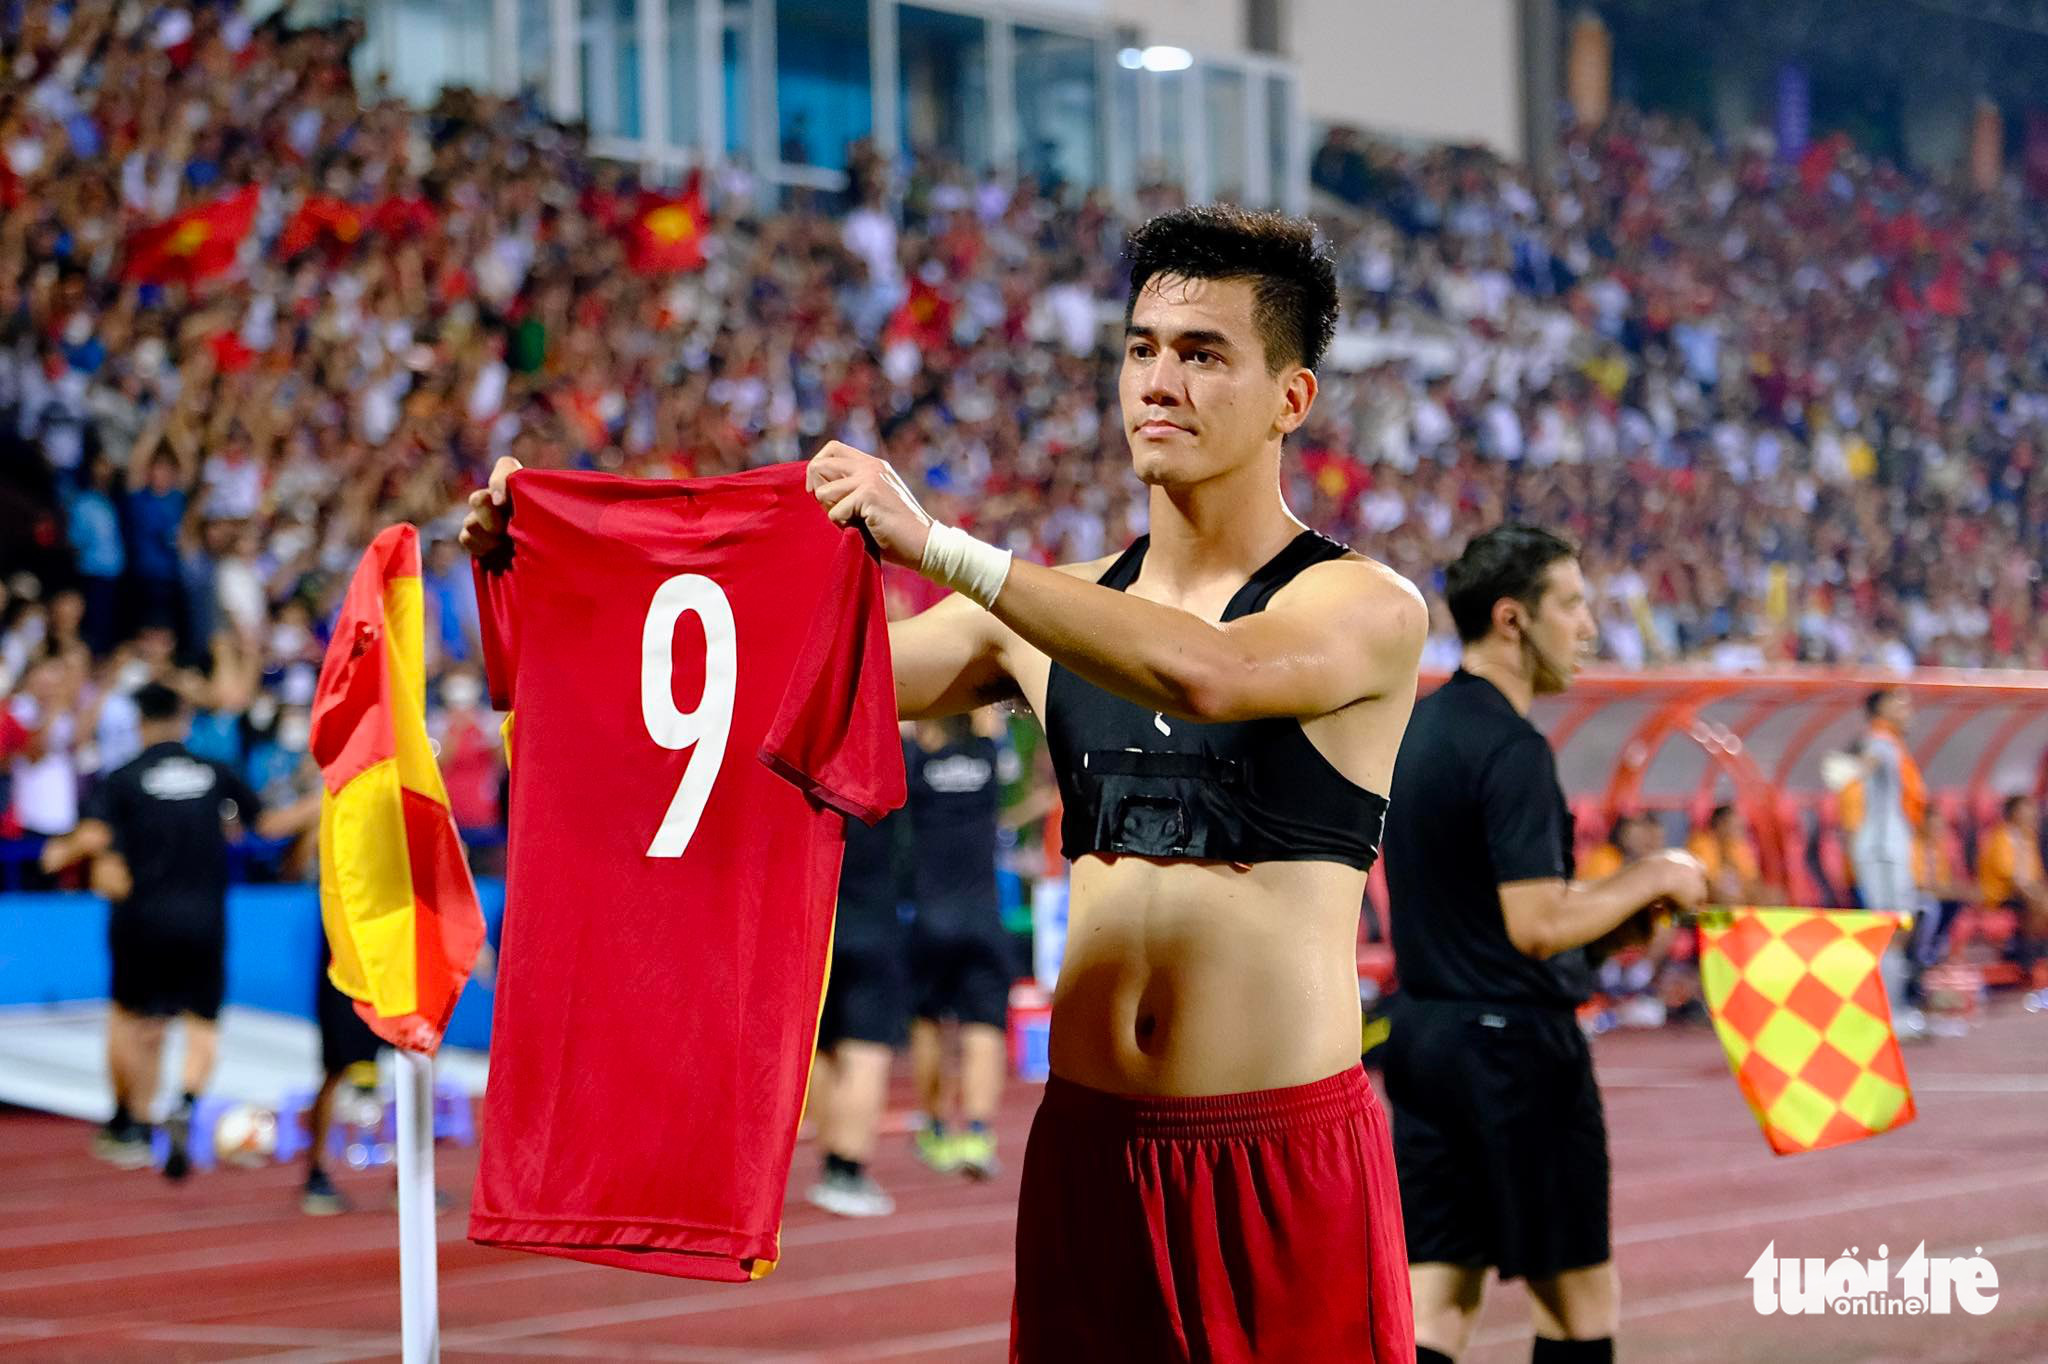 Vietnamese striker’s bra-like vest during SEA Games semifinal grabs online attention